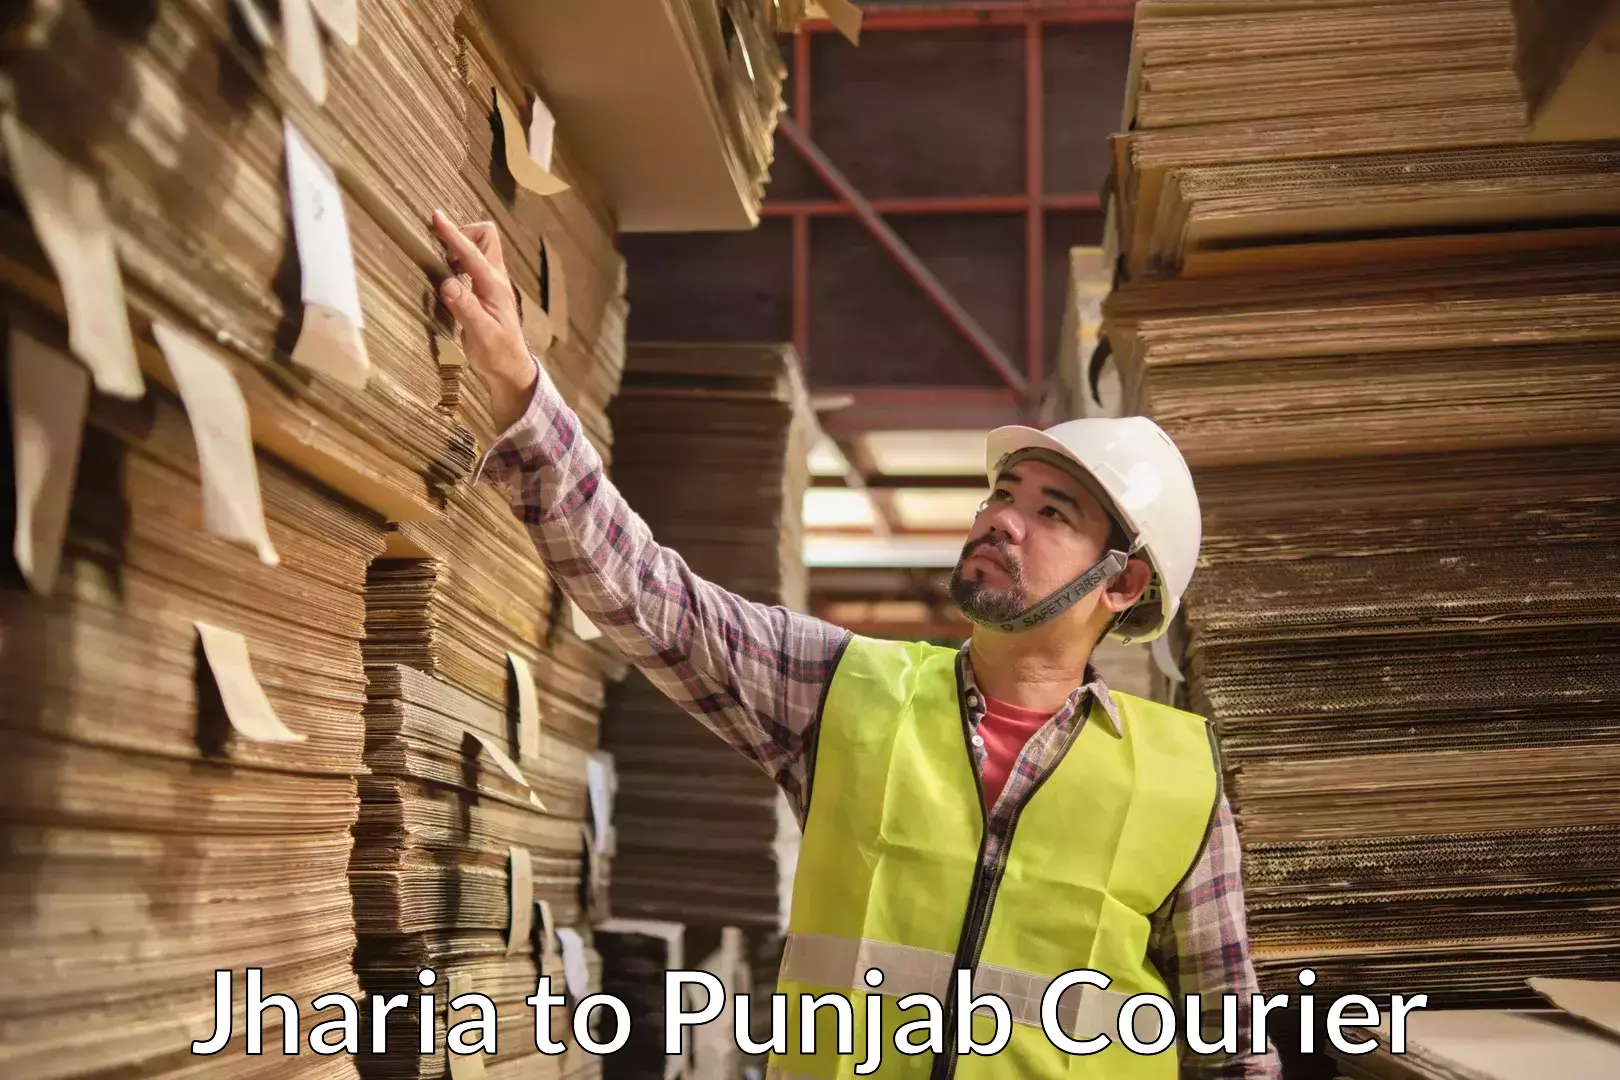 Quality moving company Jharia to Punjab